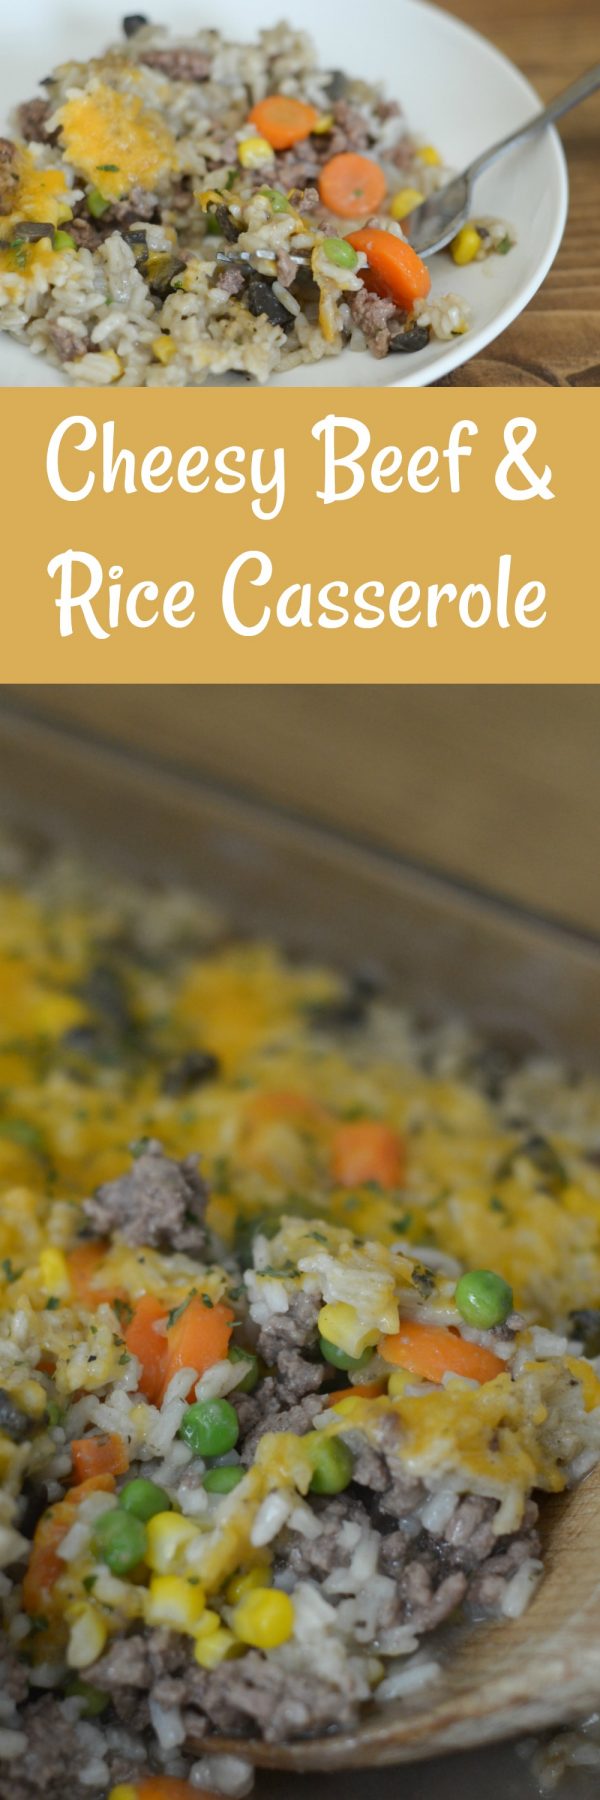 Beef & Rice Casserole